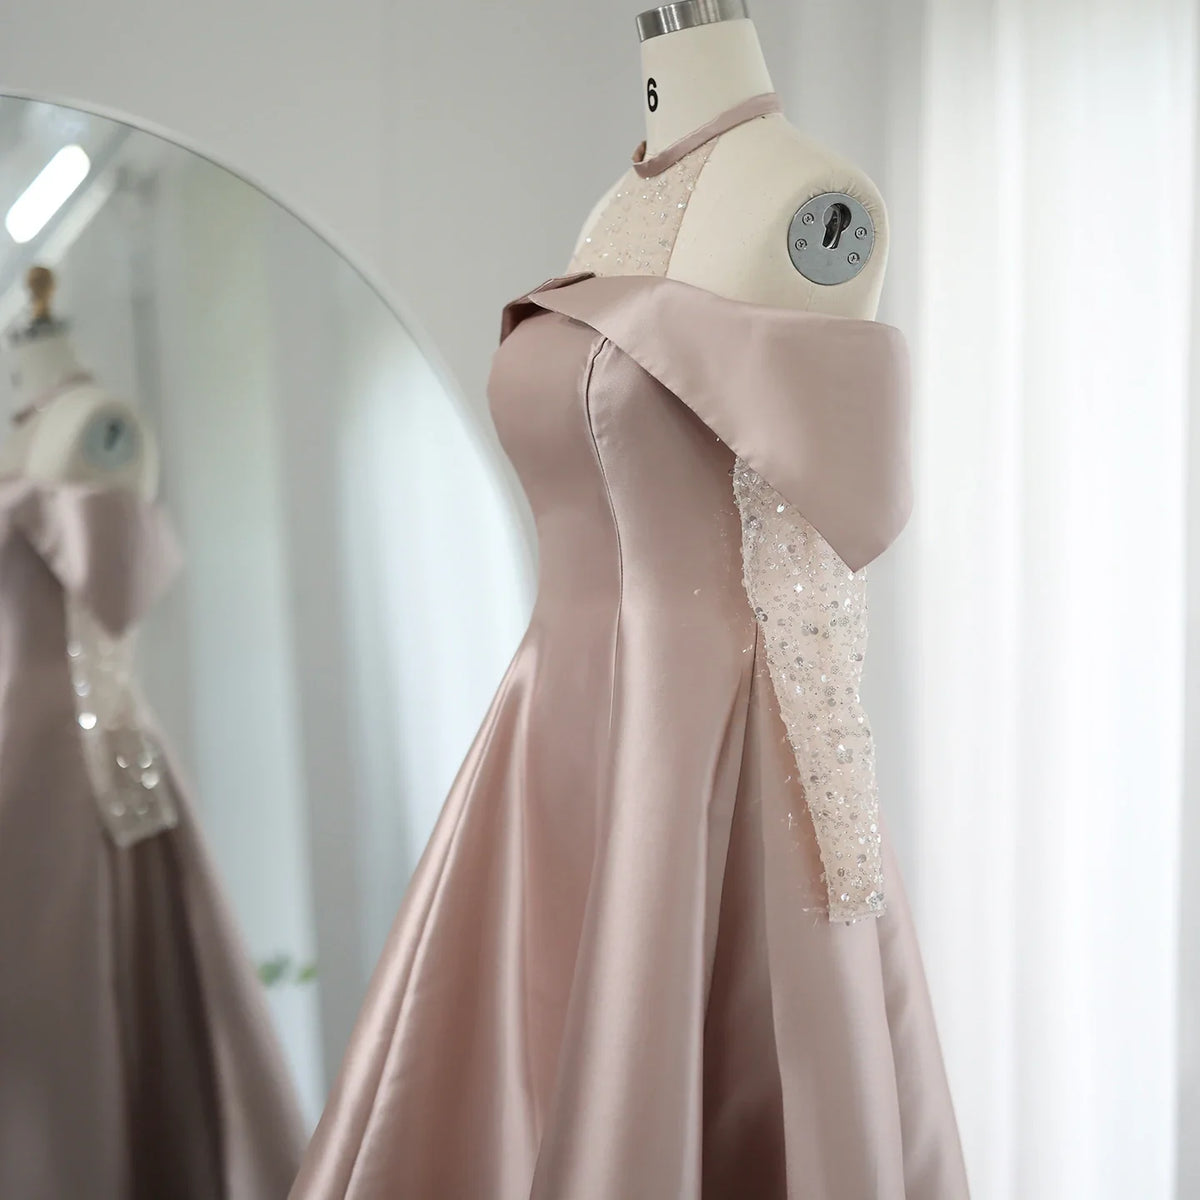 Dreamy Vow Elegant Khaki Satin High Low Dubai Evening Dress for Wedding Party Halter Arabic Women Midi Formal Guest Gowns F 058